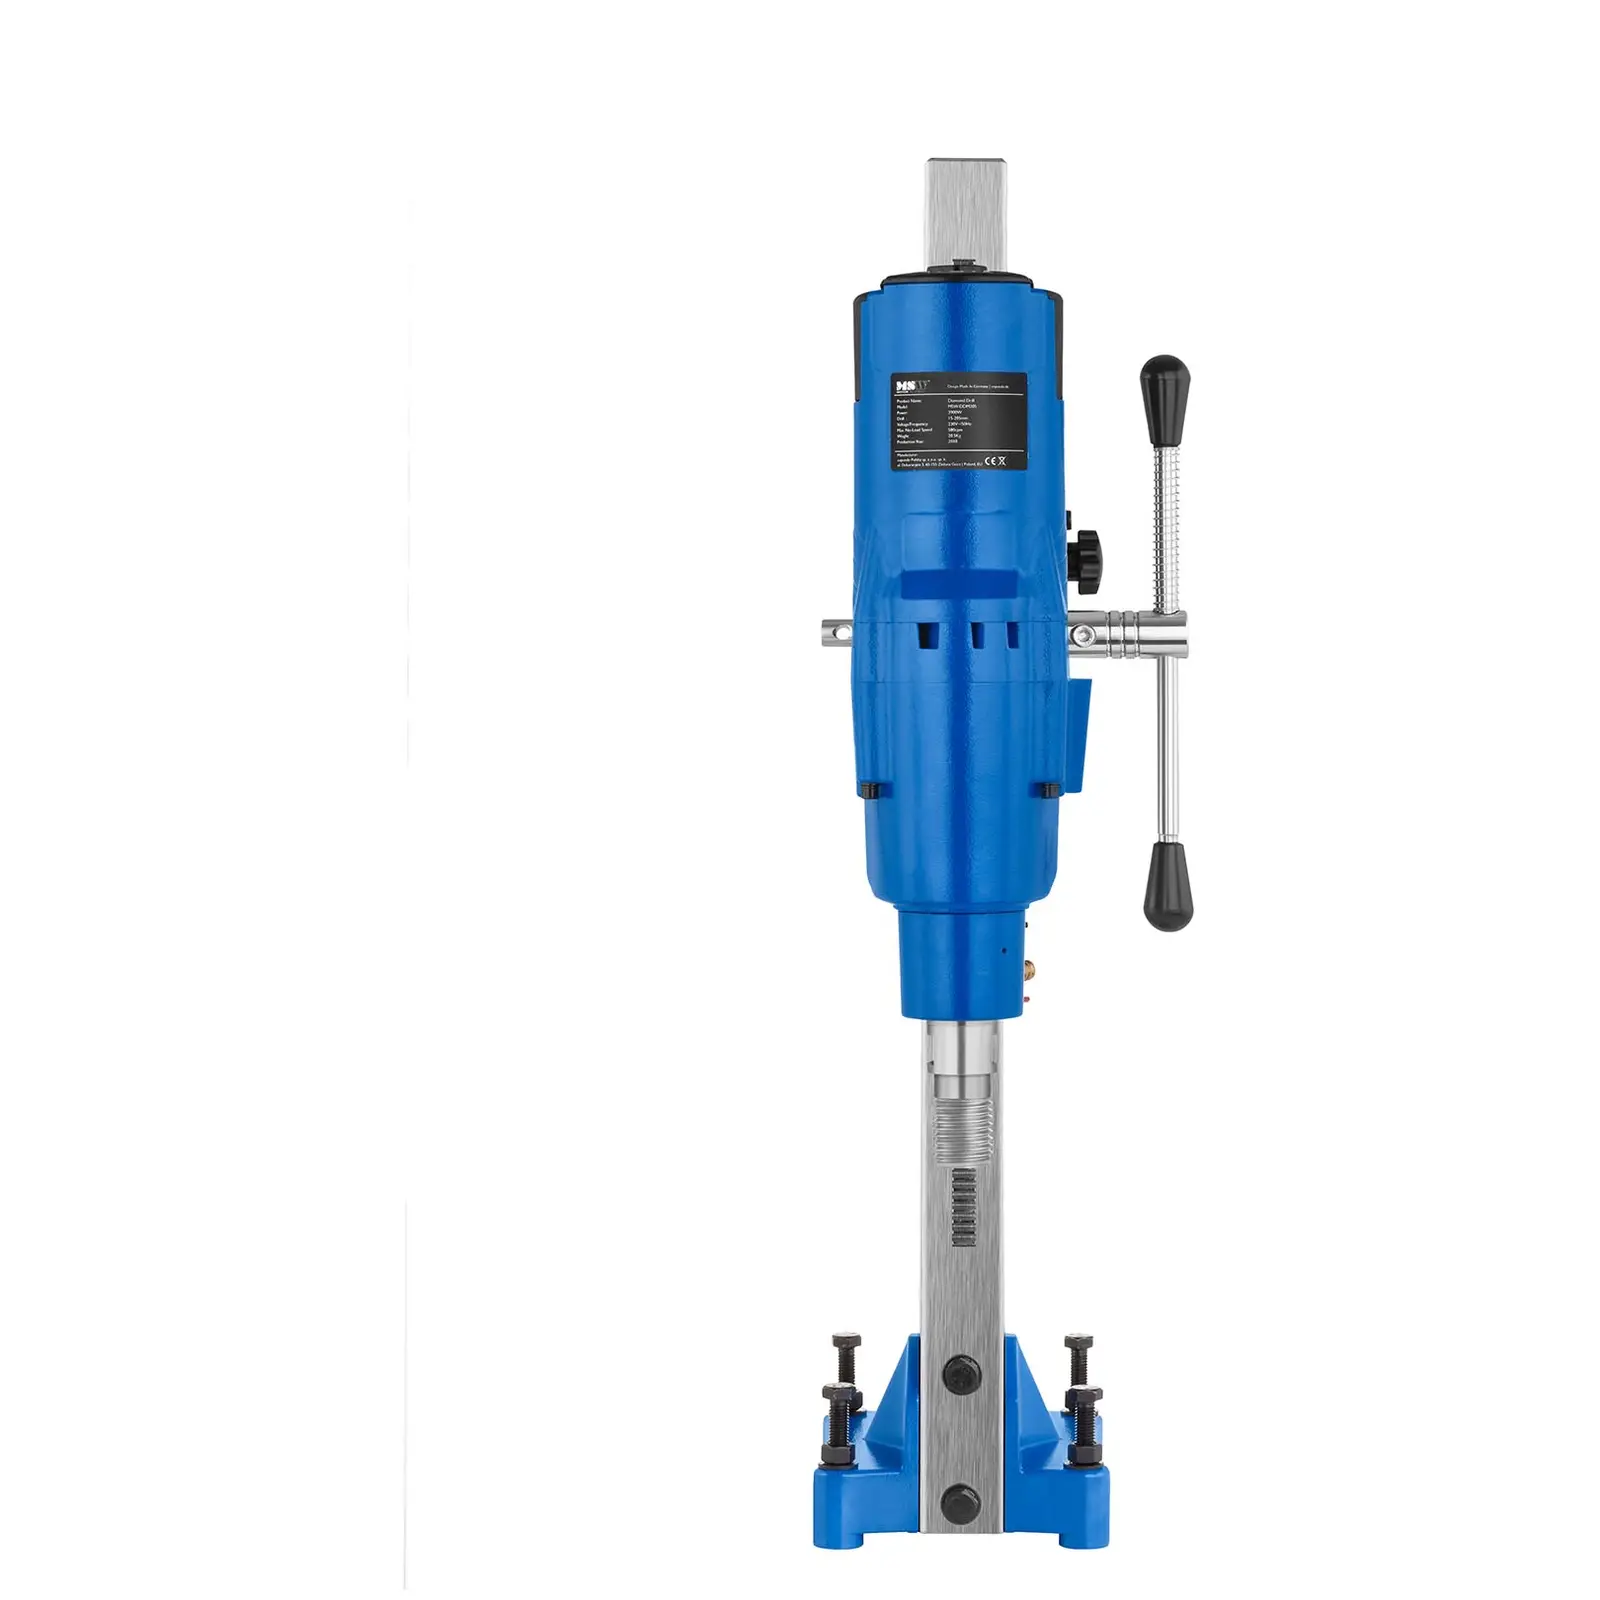 Perforadora de hormigón - 3900 Watt - 580 rpm - diámetro de taladrado máx. 205 mm